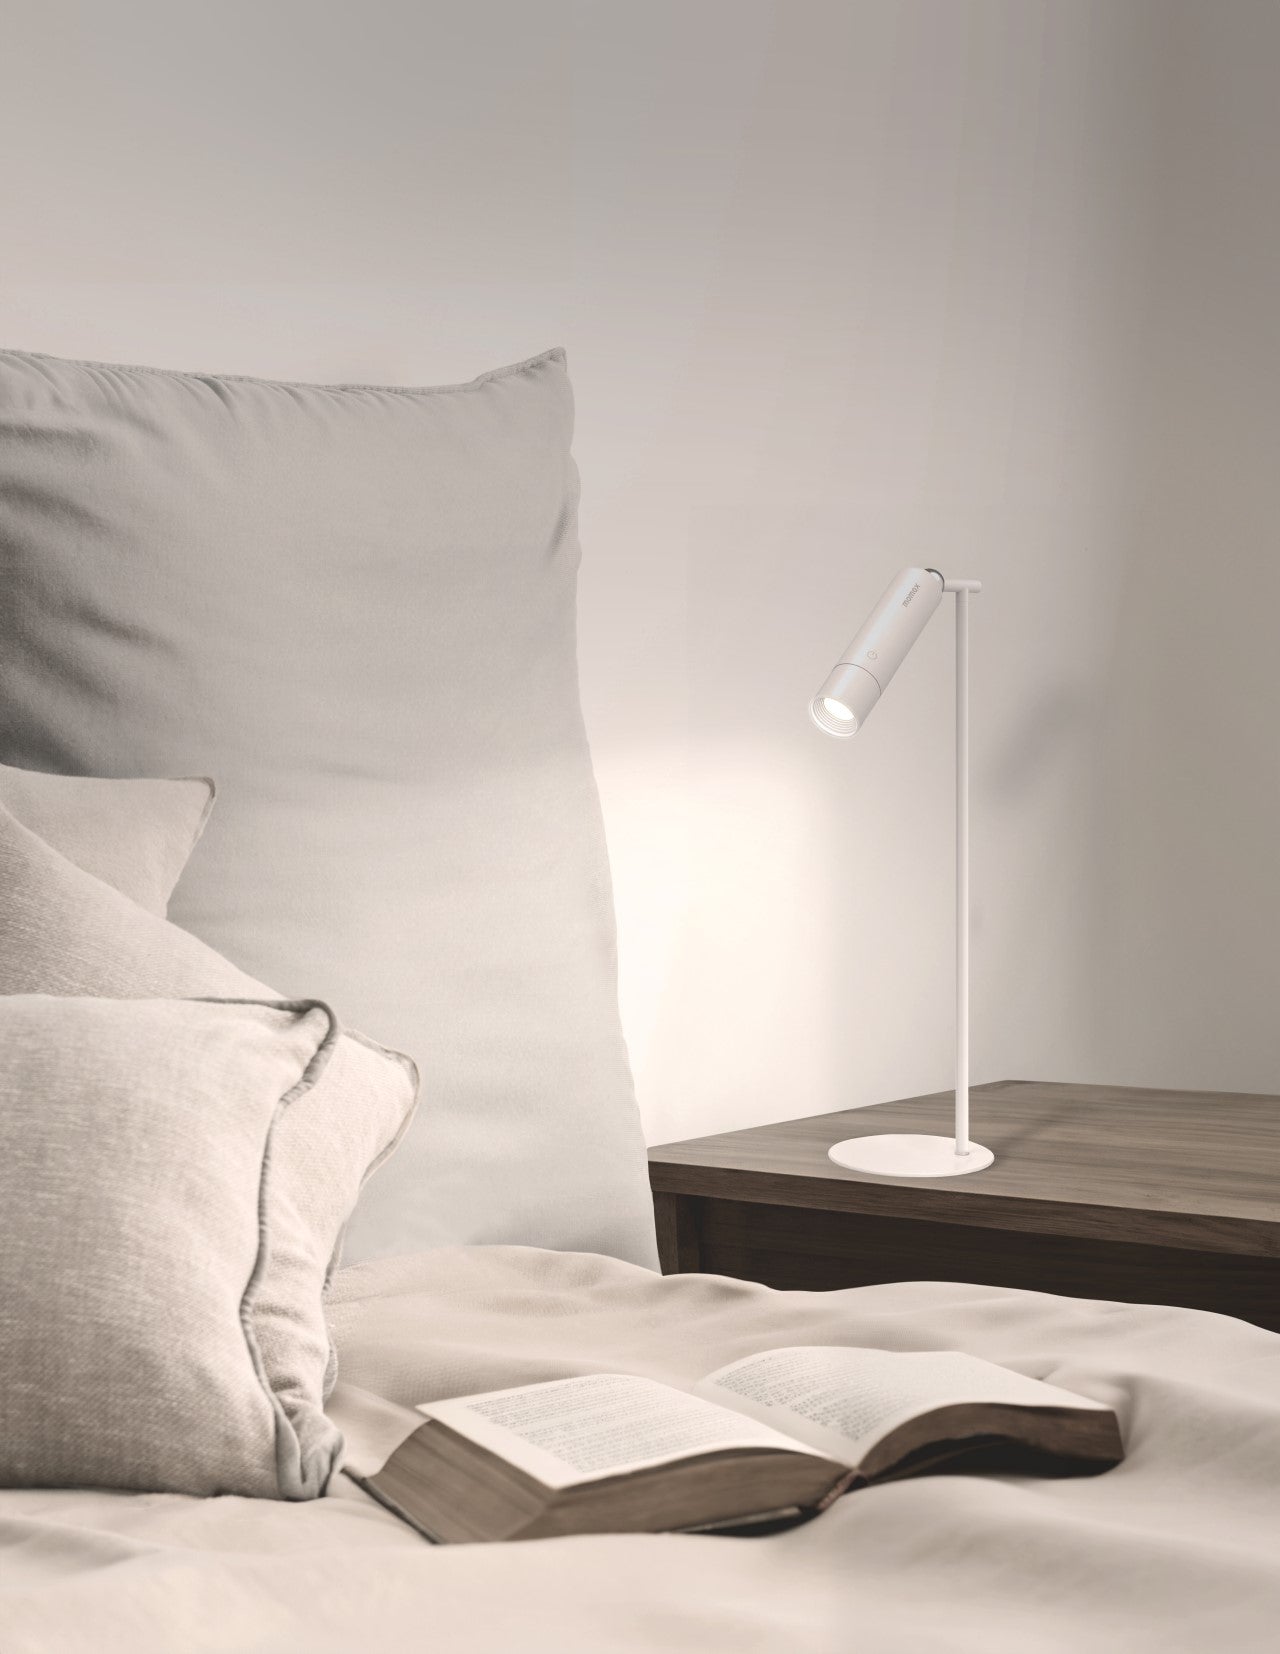 SnapLux Portable LED Lamp